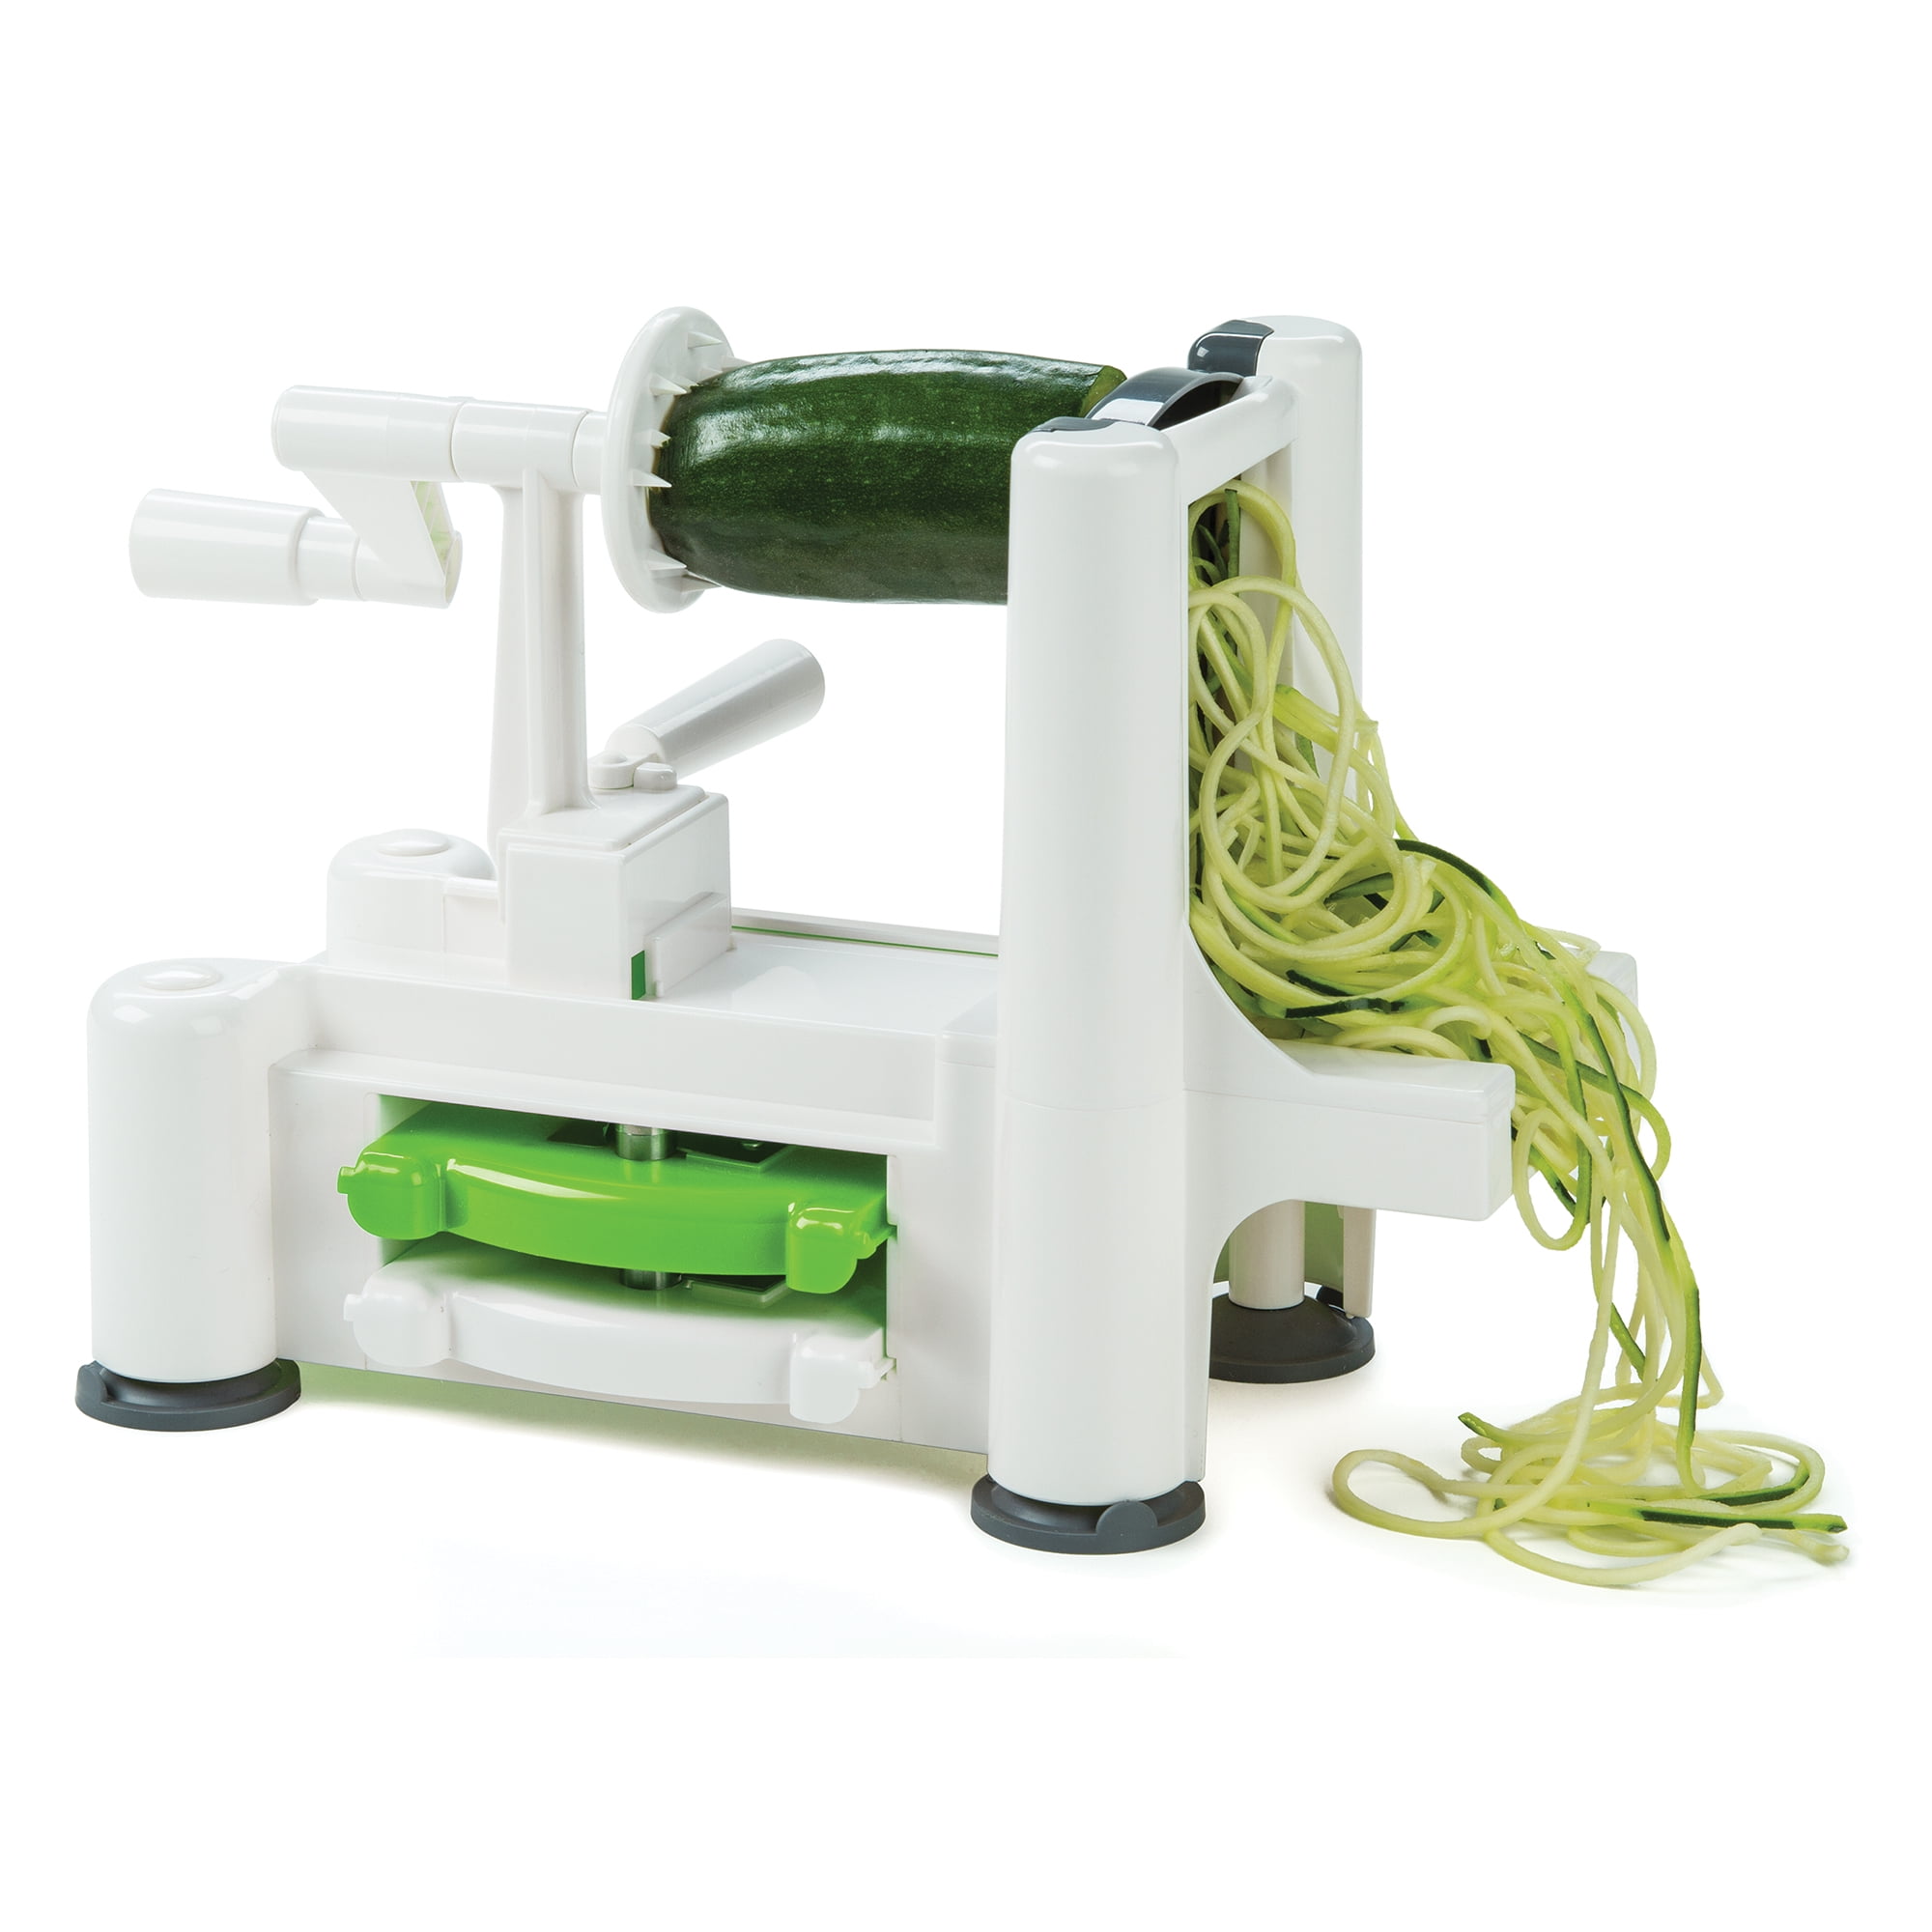 ICO Hand Vegetable Spiralizer, Green/White